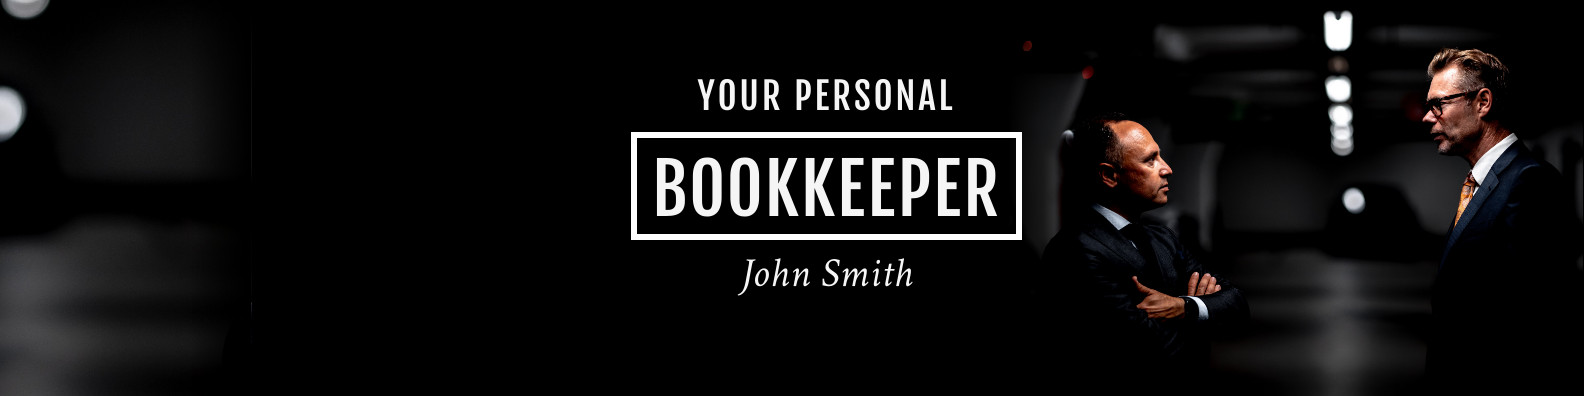 Your Personal Bookkeeper Linkedin Profile BG